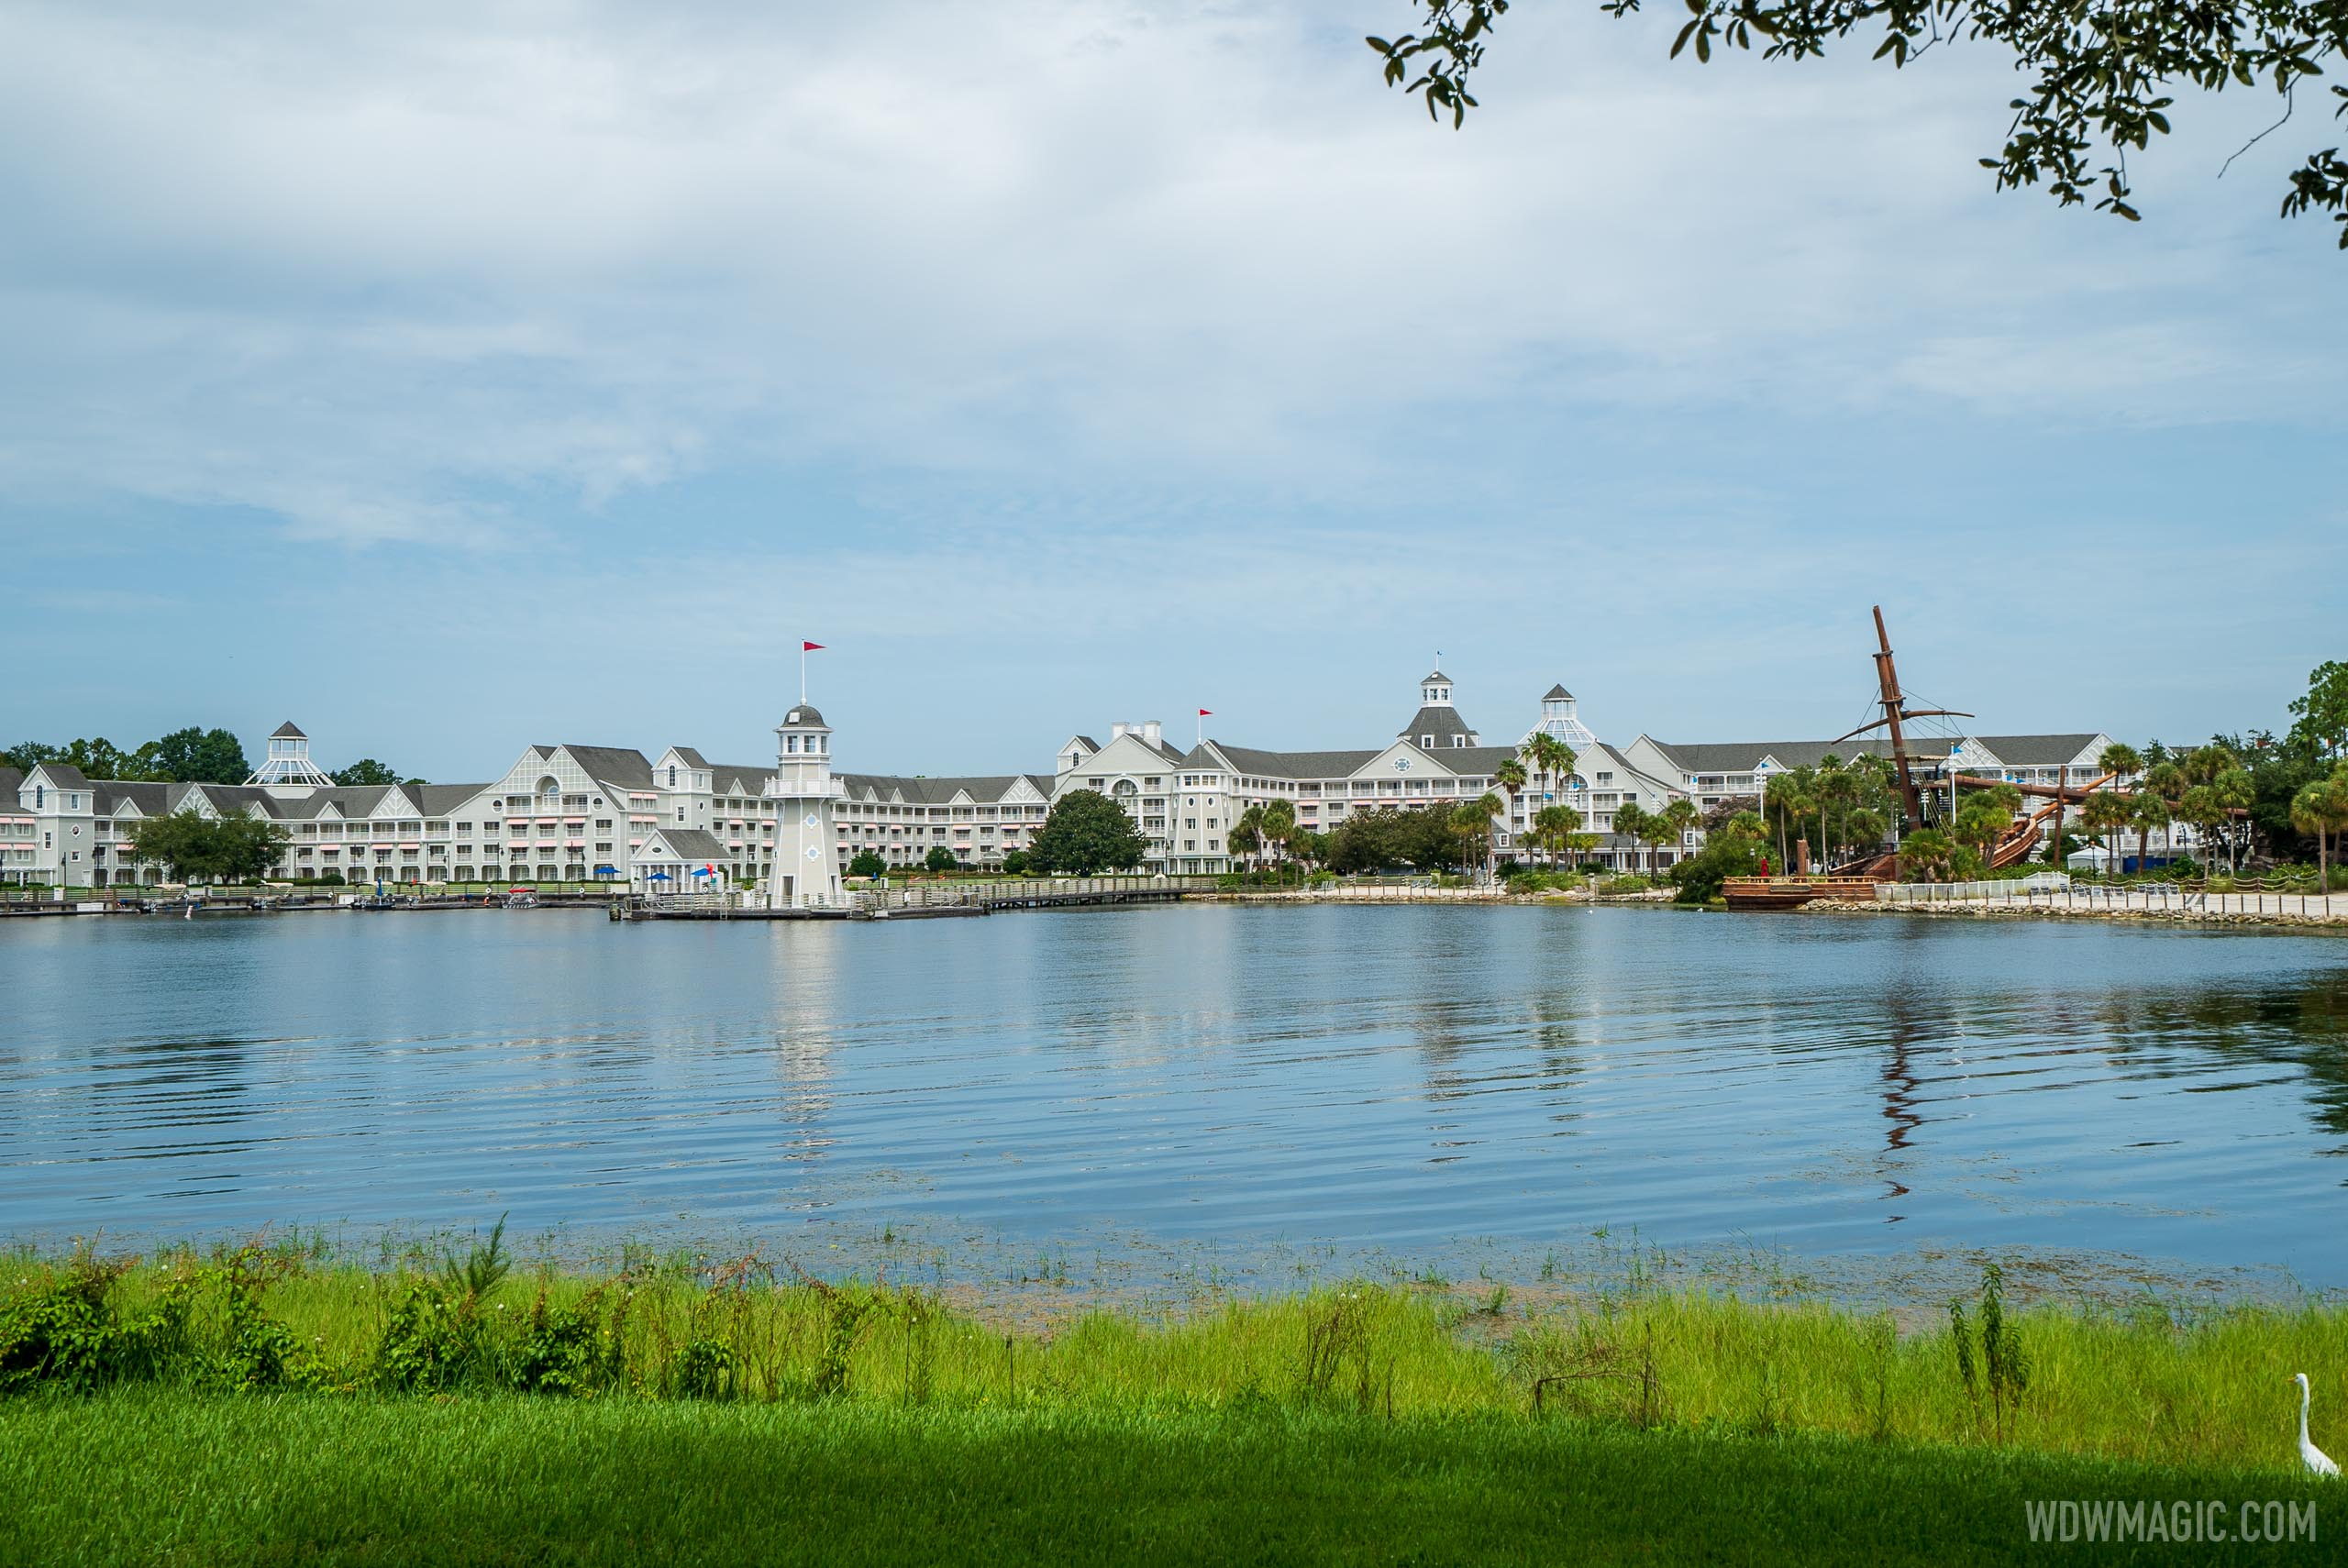 Walt Disney World's Yacht Club Resort to undergo nearly 6-month-long refurbishment